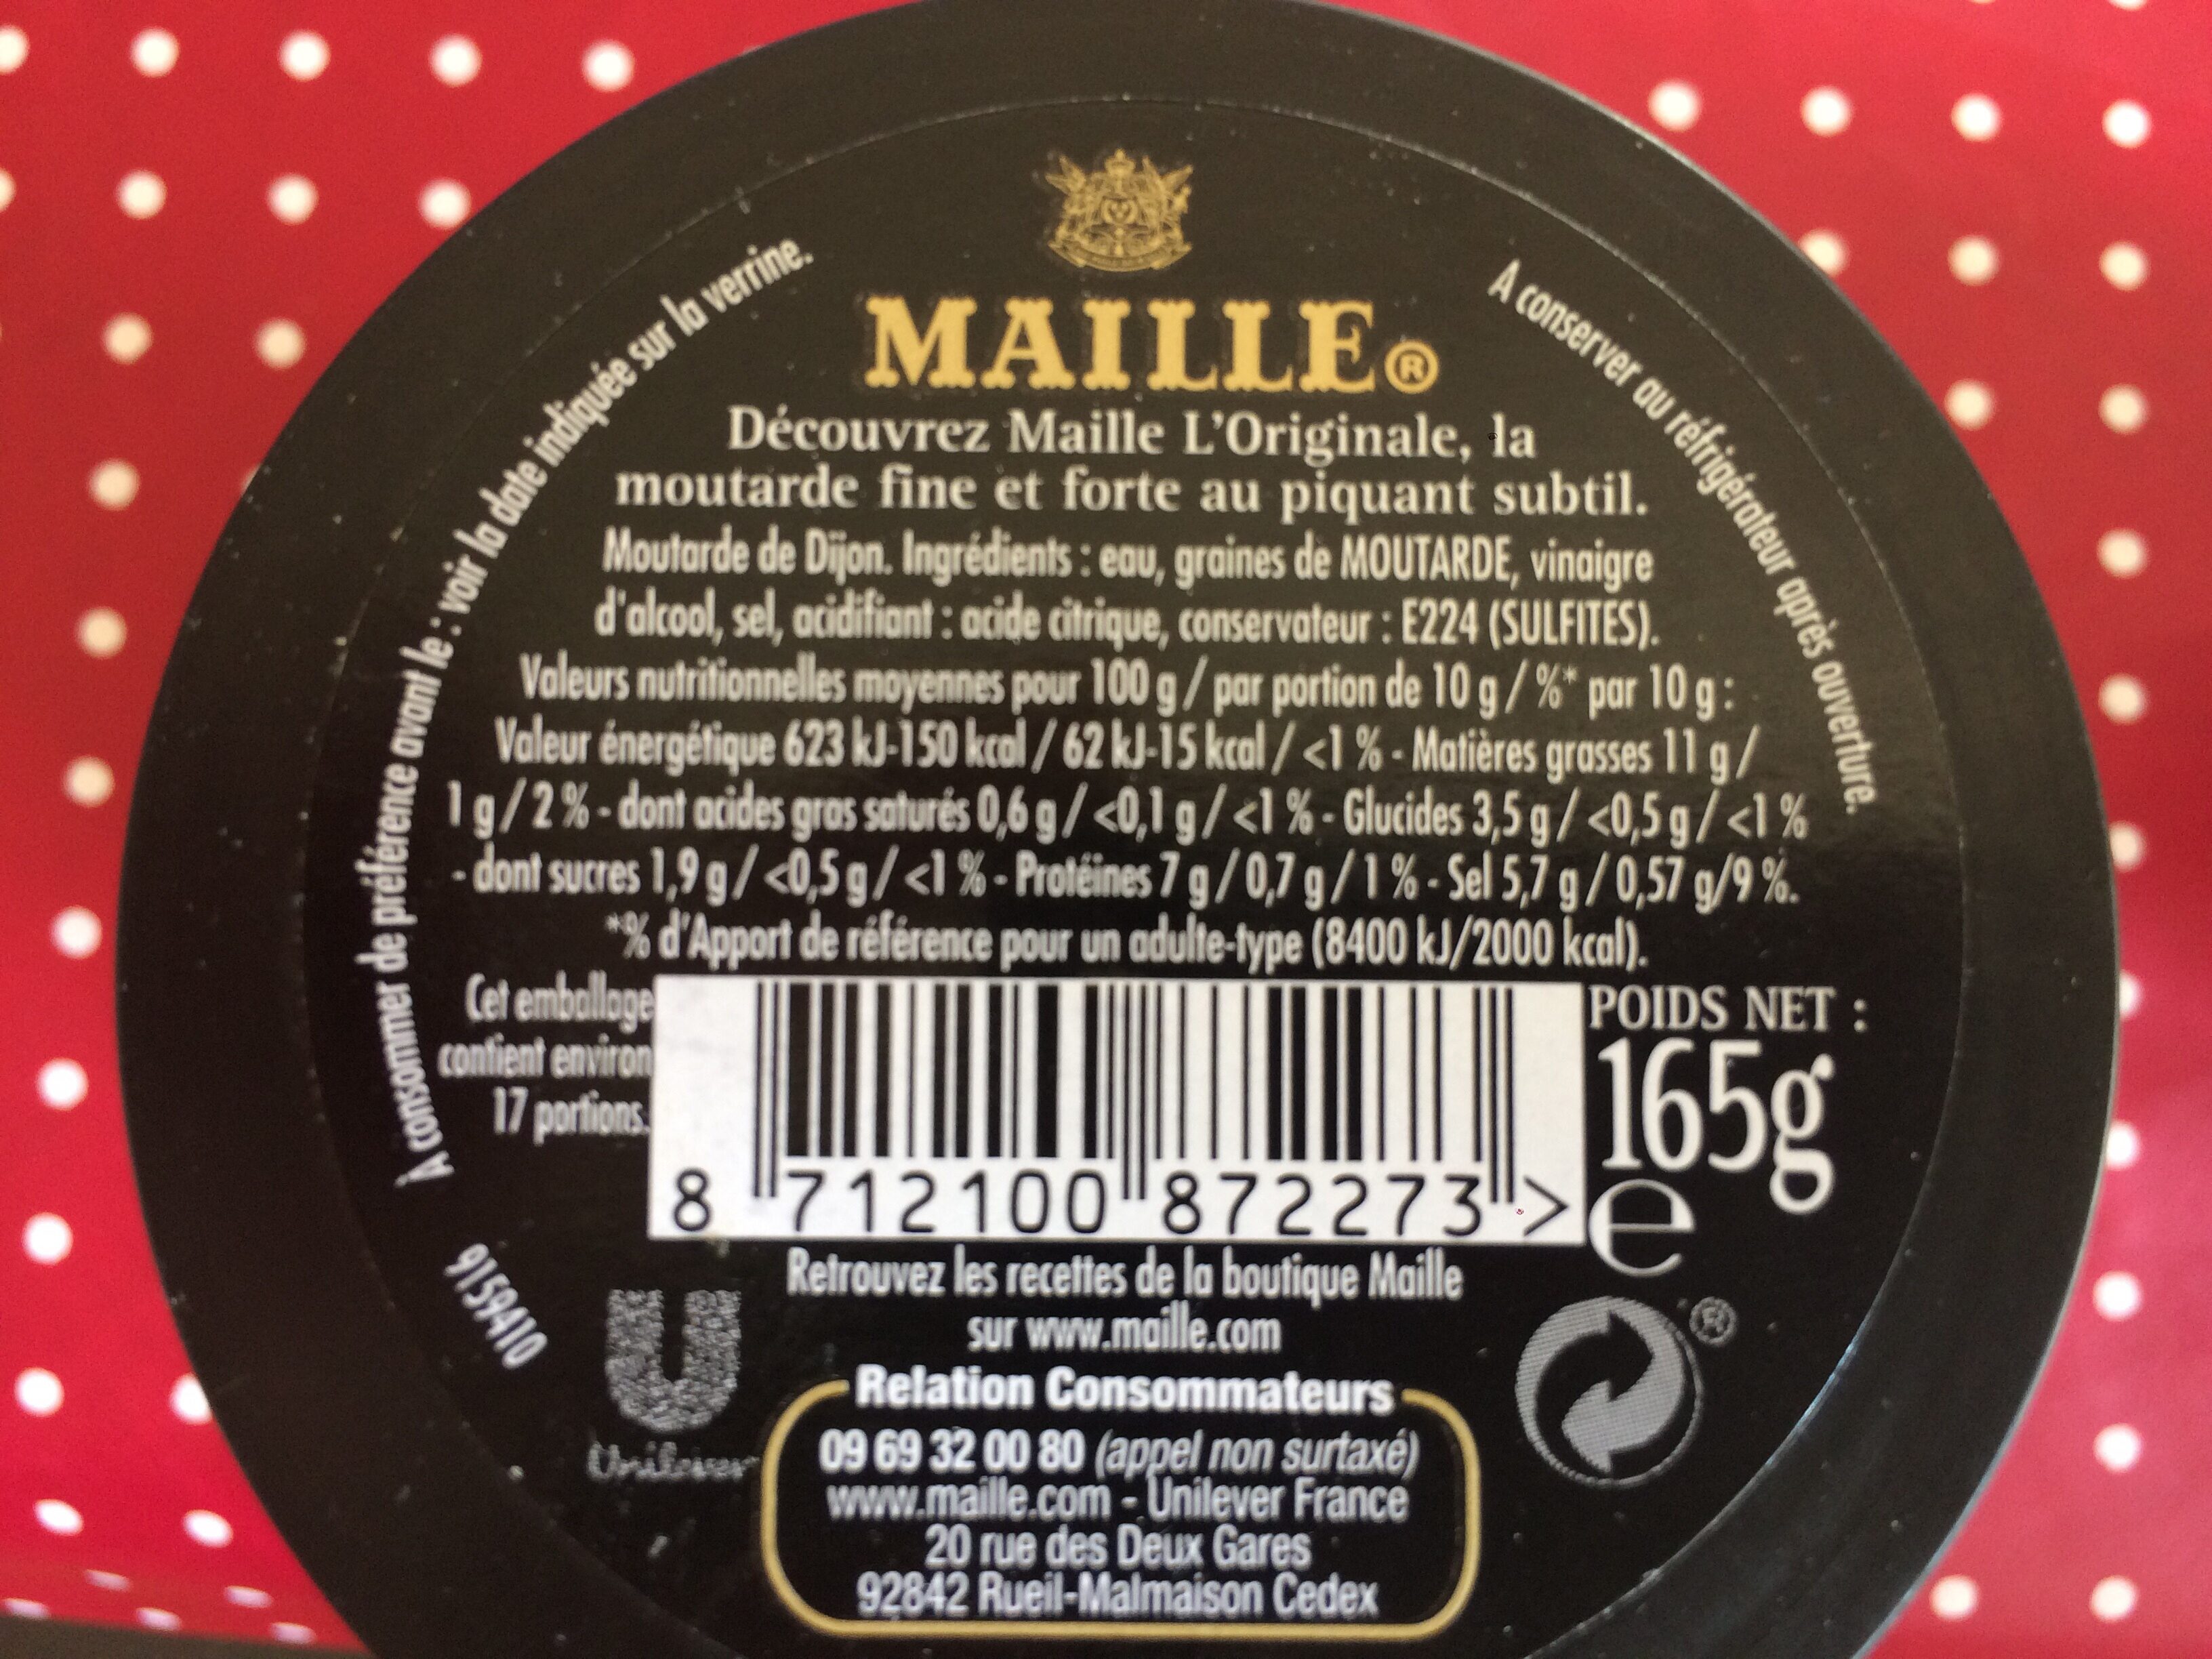 Maille Moutarde Fine De Dijon L'Originale Verrine 165g - Ingredients - fr